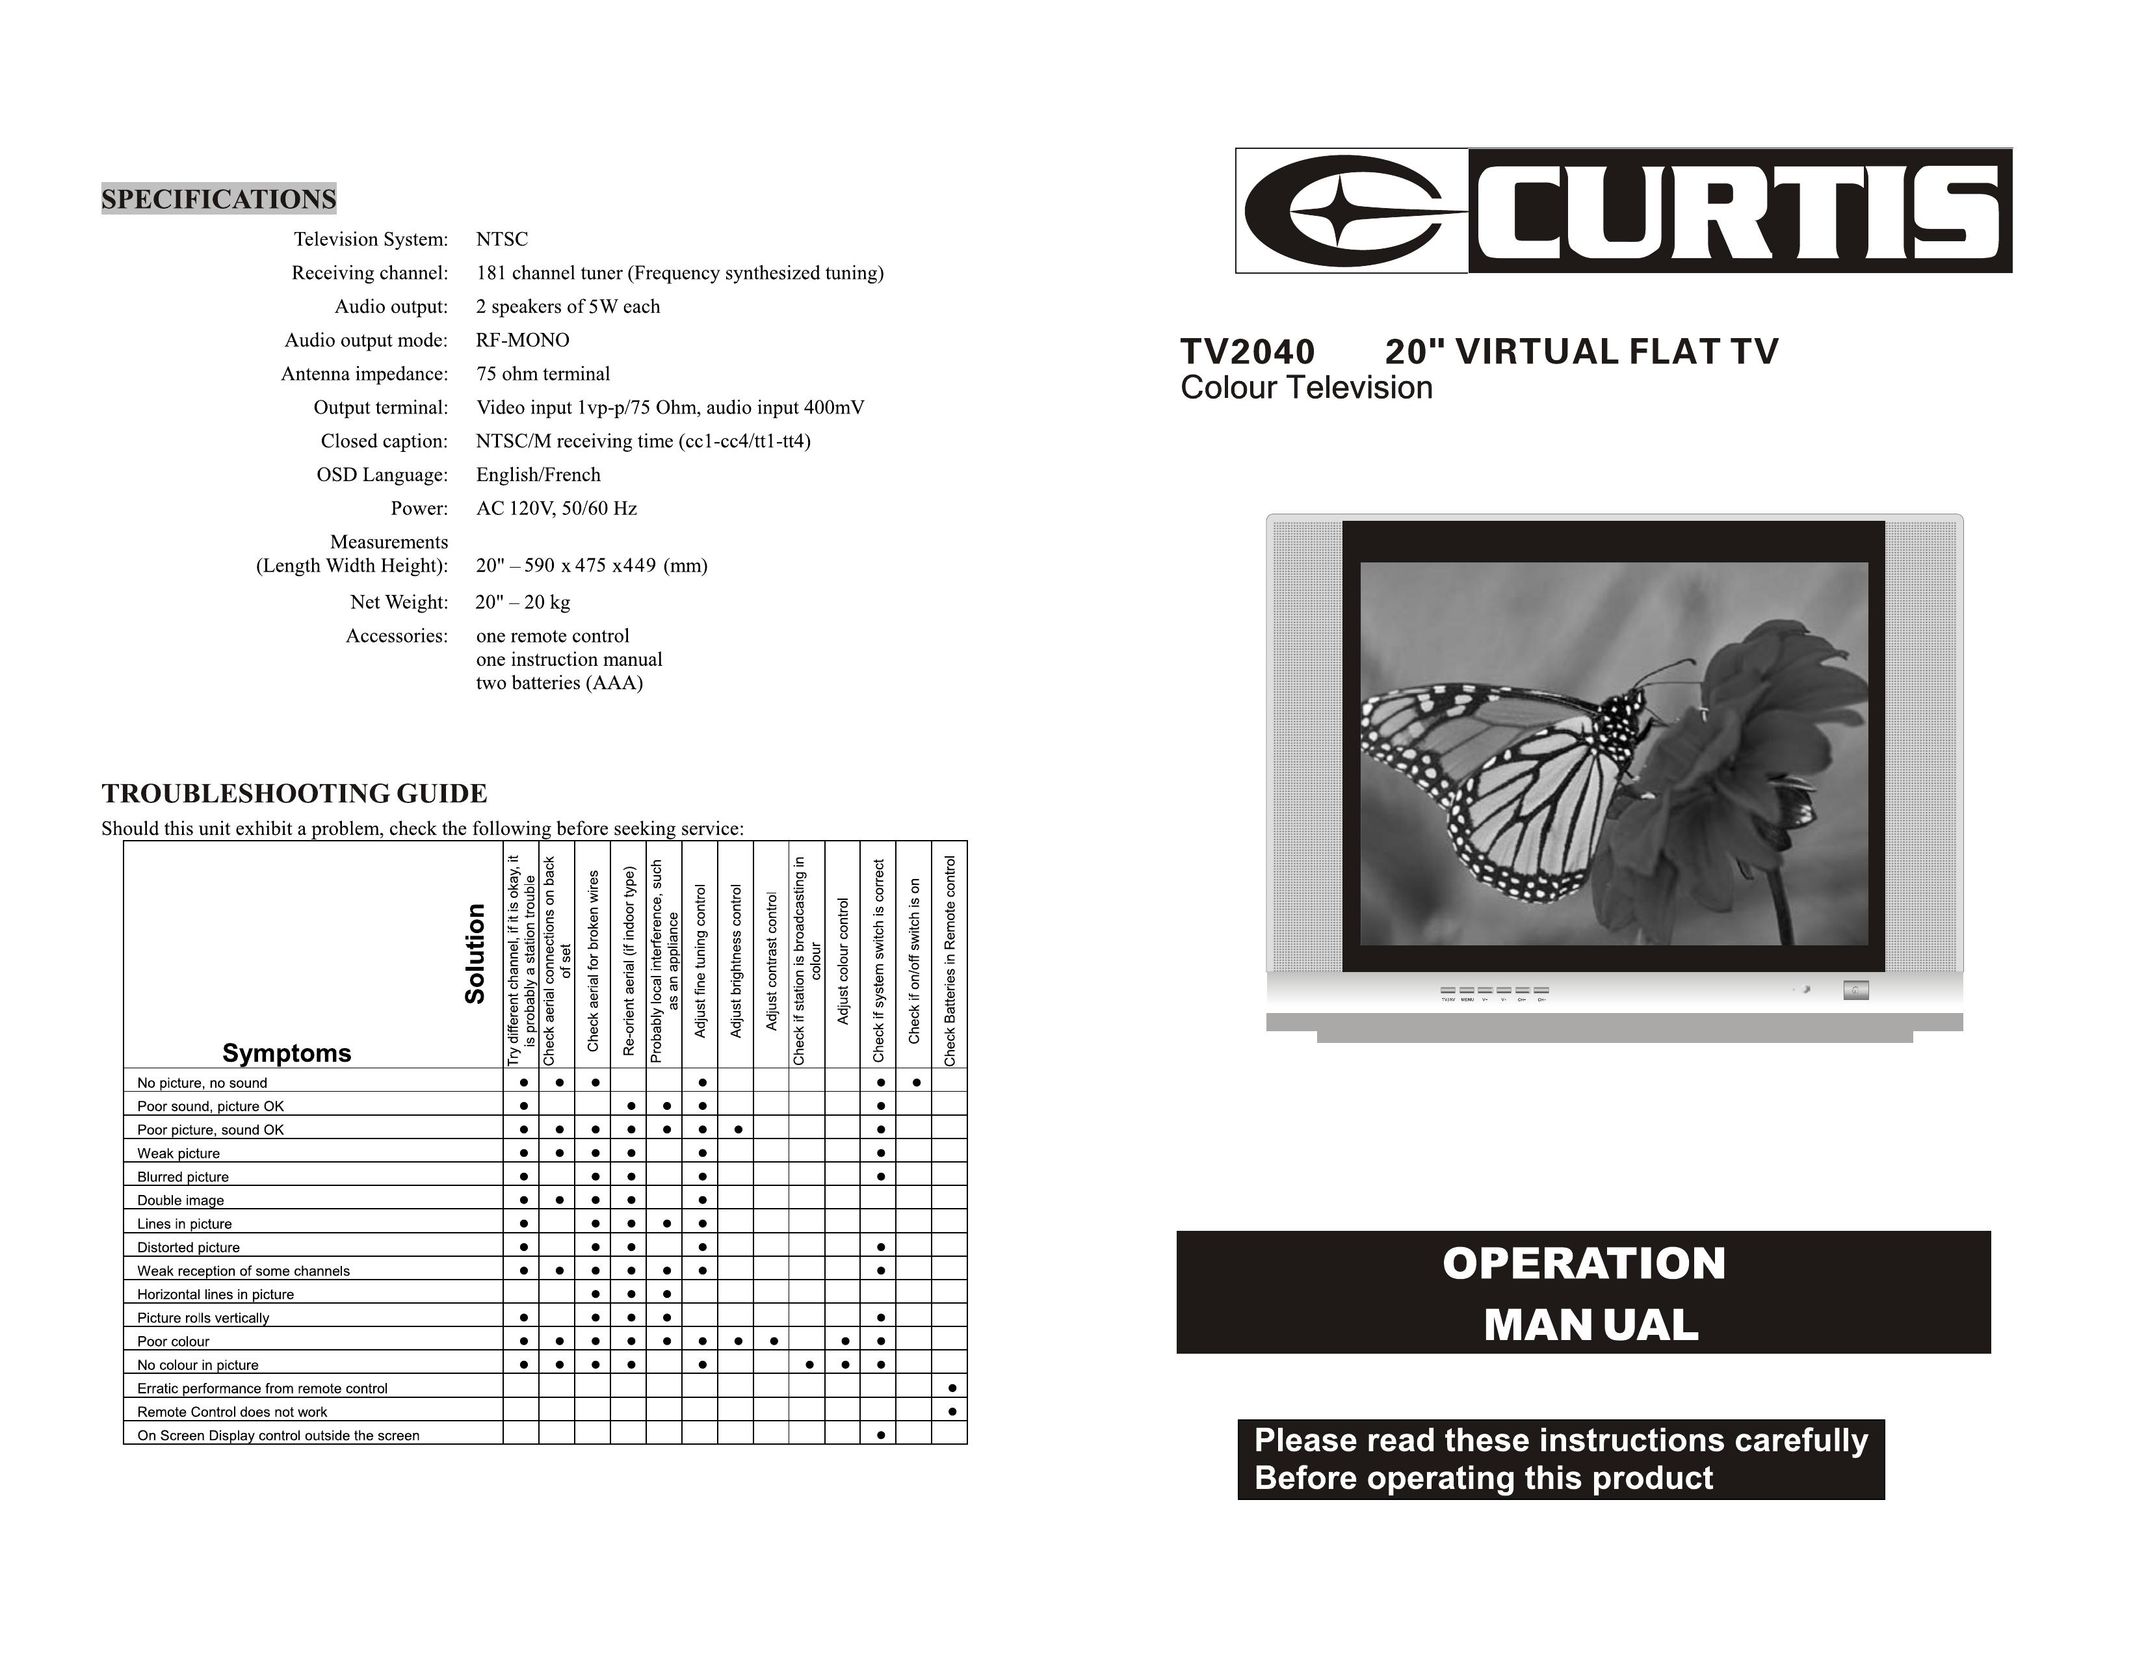 Curtis TV2040 CRT Television User Manual